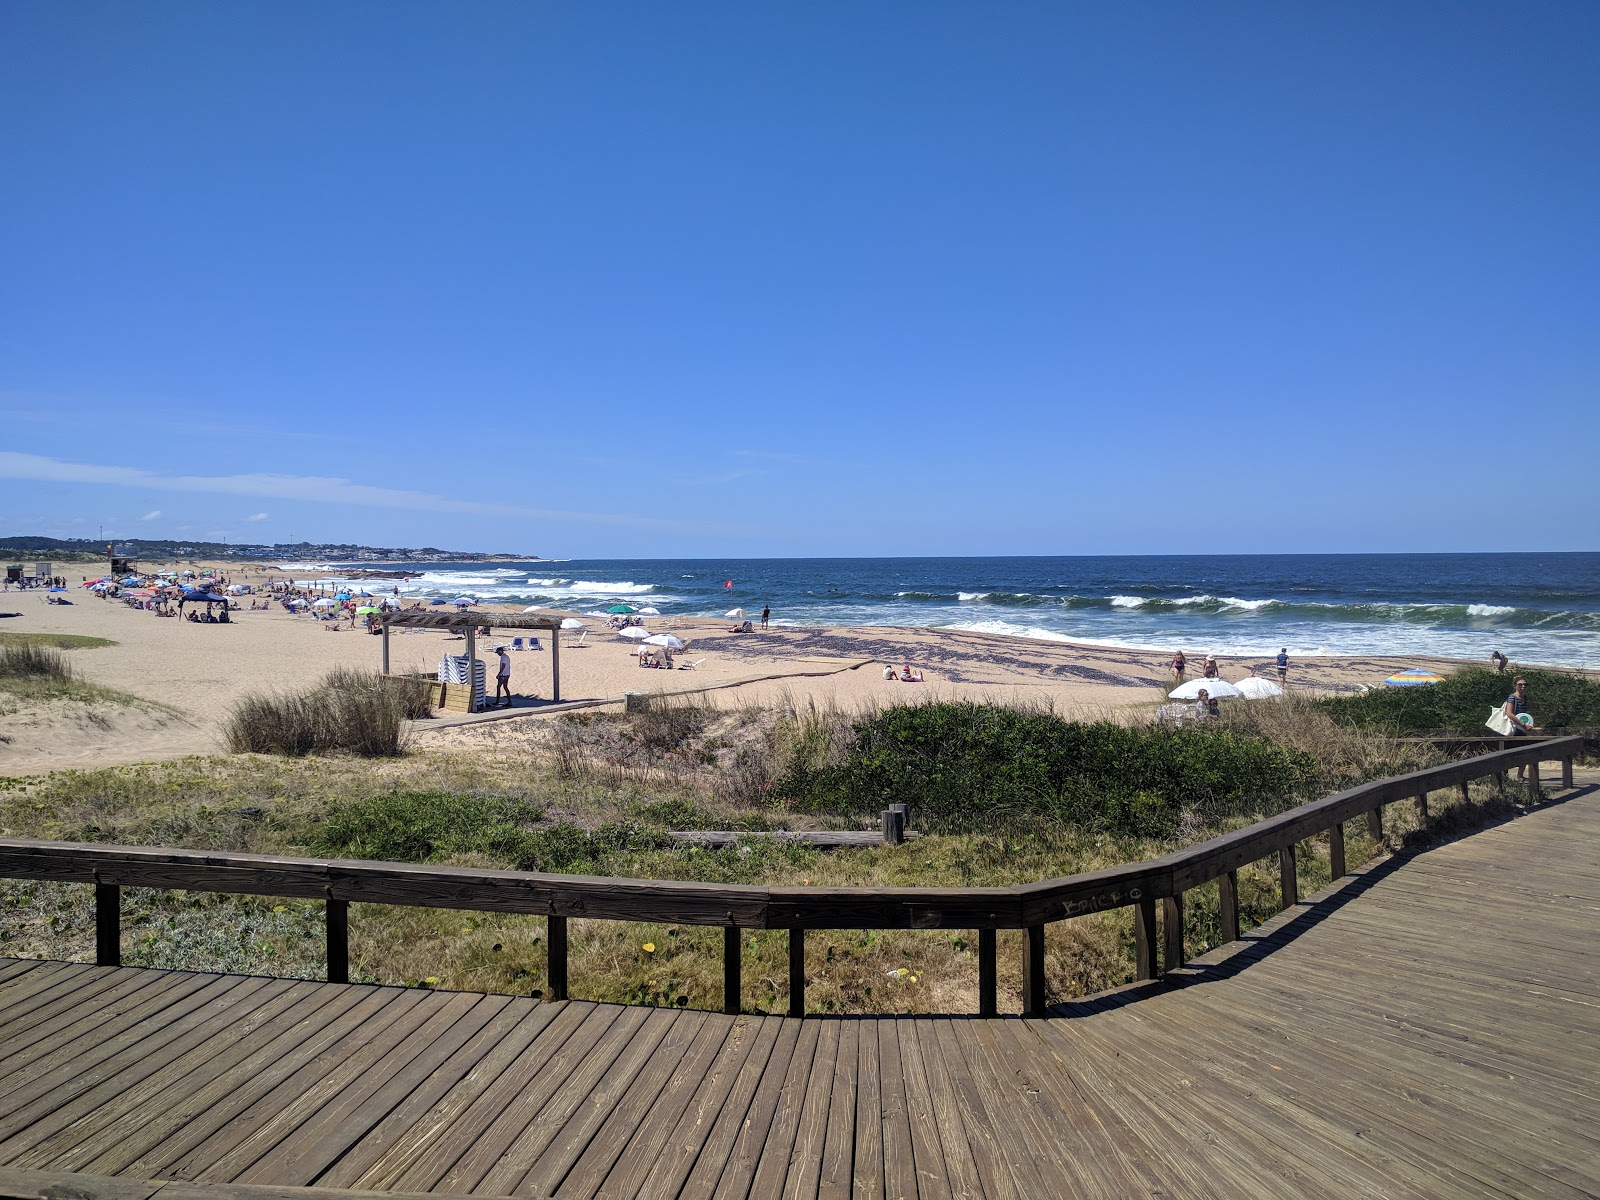 Foto de Playa Montoya con playa amplia